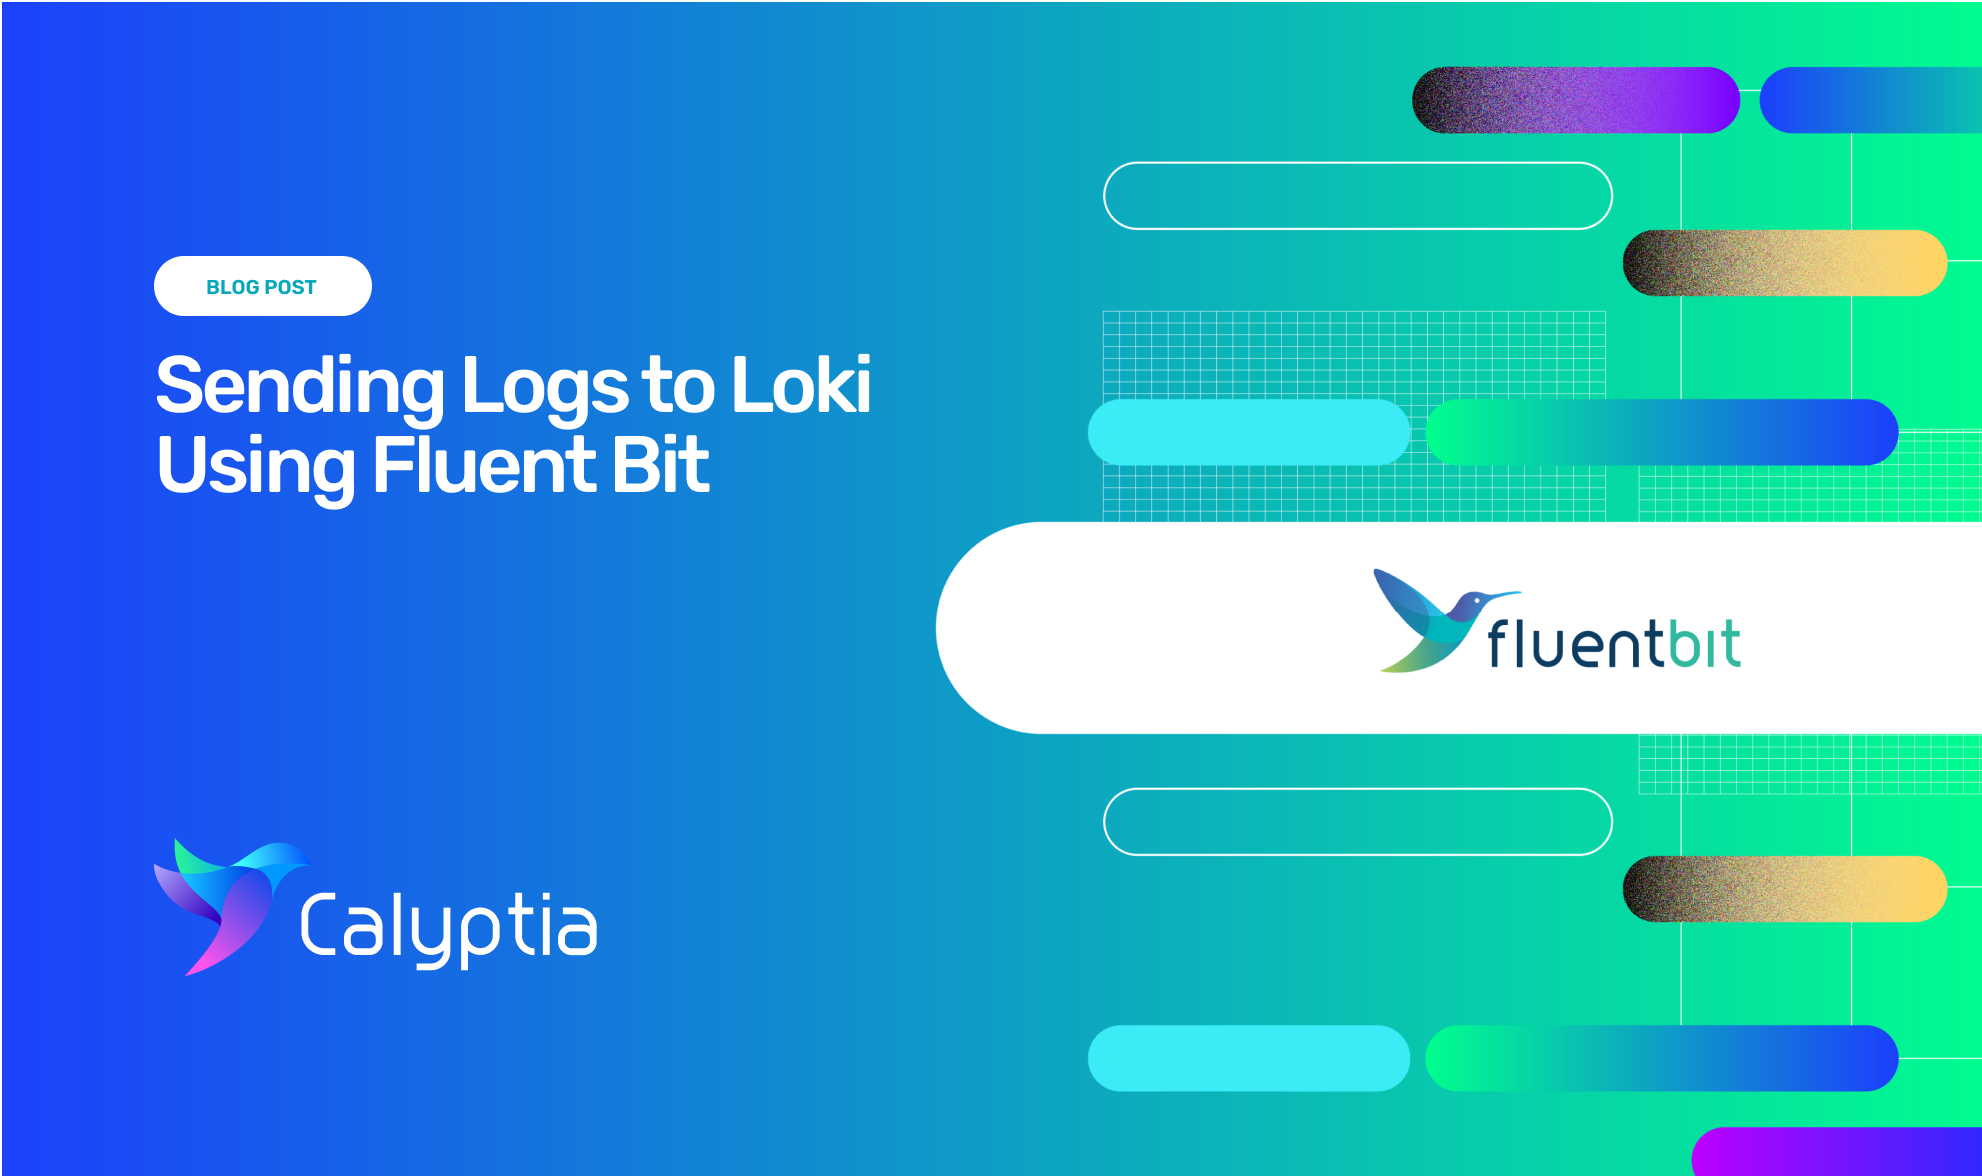 Sending logs to Loki using Fluent Bit